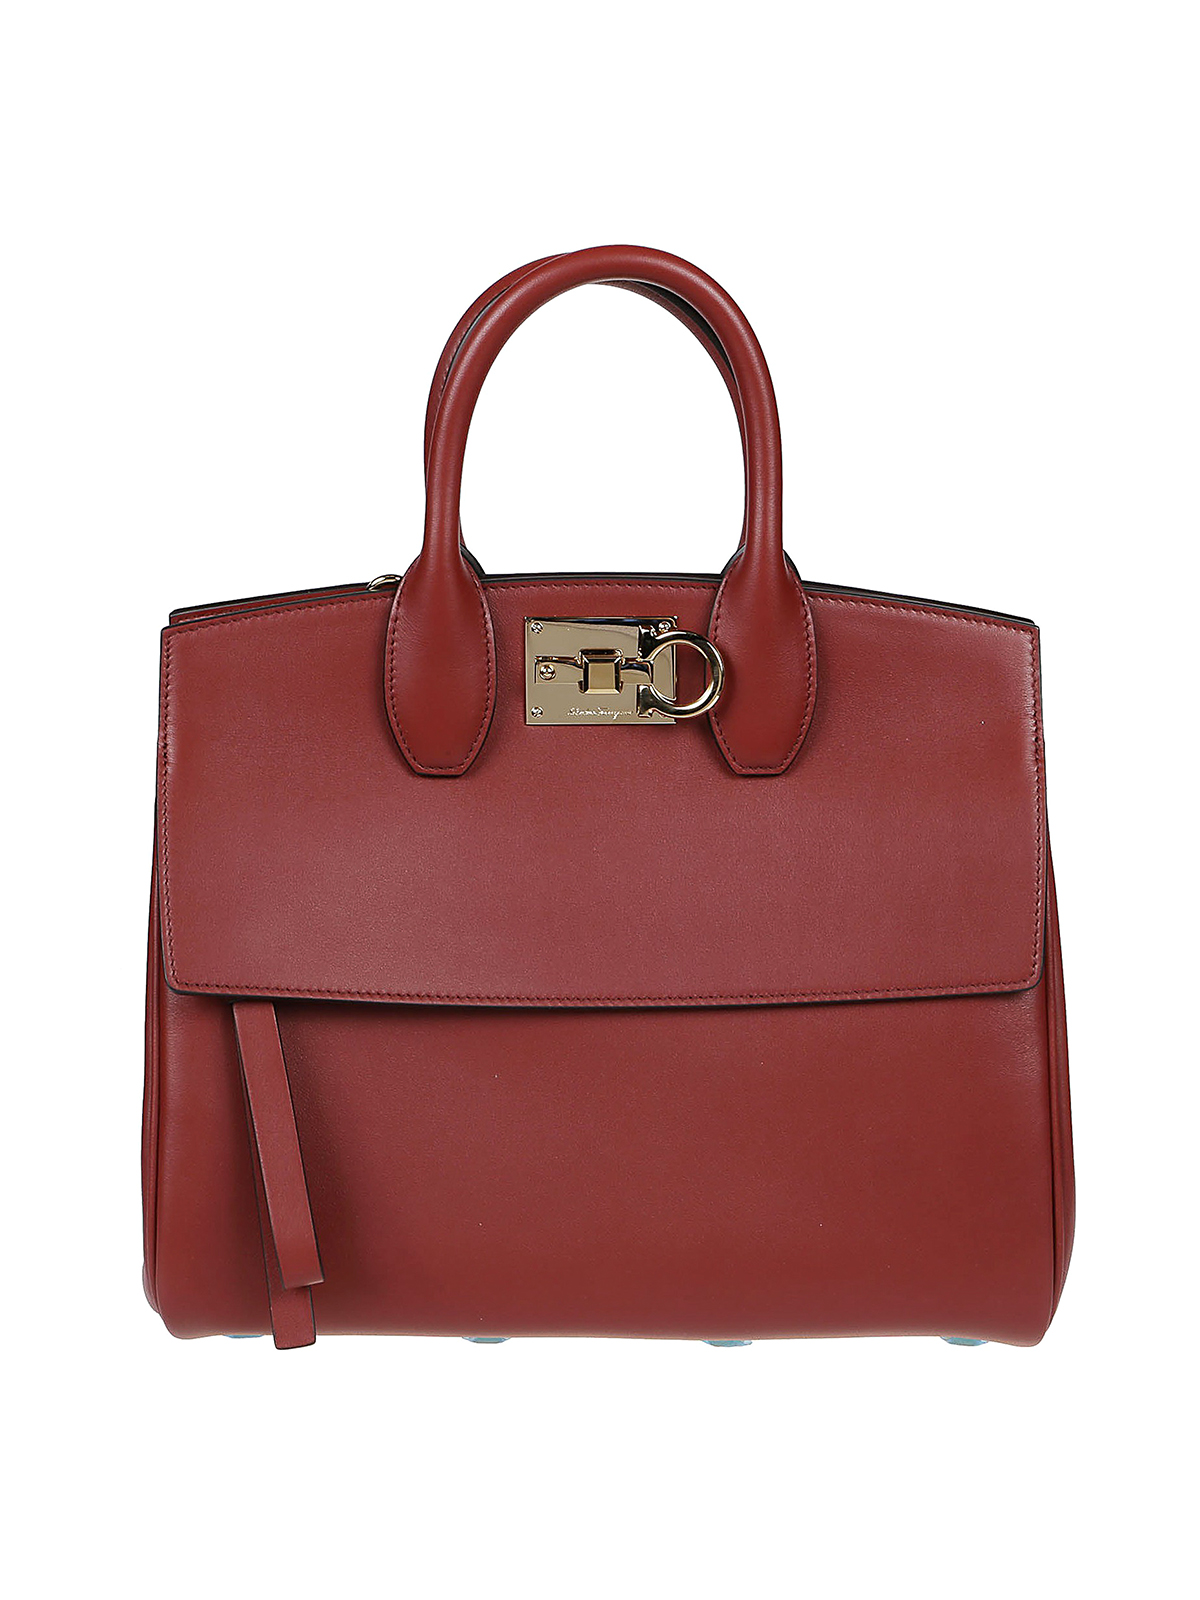 Ferragamo Studio Leather Bag In Dark Red